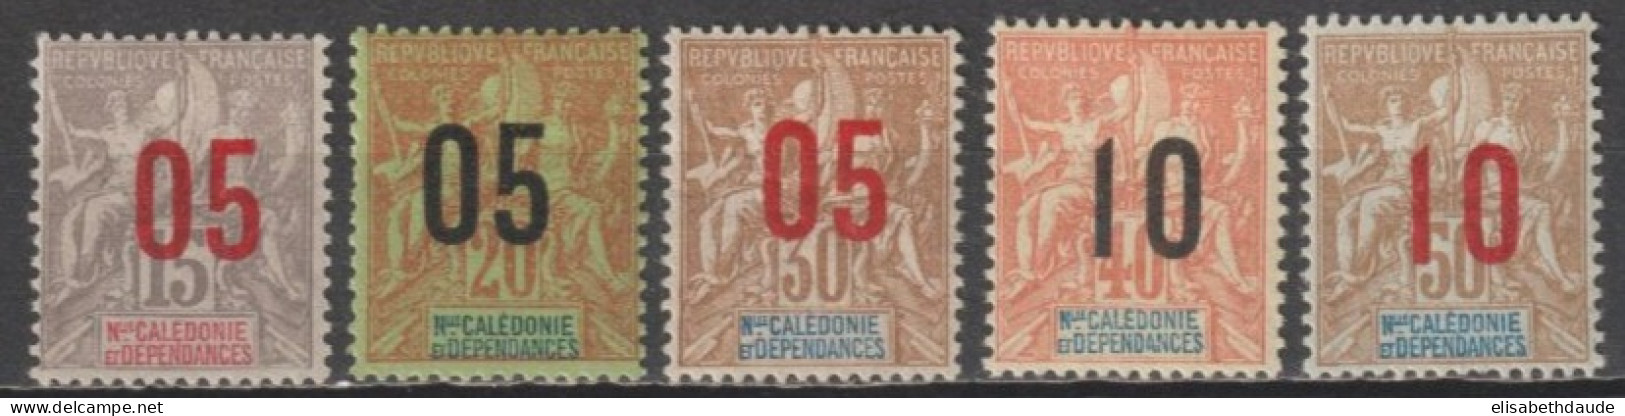 NOUVELLE CALEDONIE - 1912 - SERIE COMPLETE YVERT N°105/109 * MLH - COTE = 12.5 EUR - Nuevos